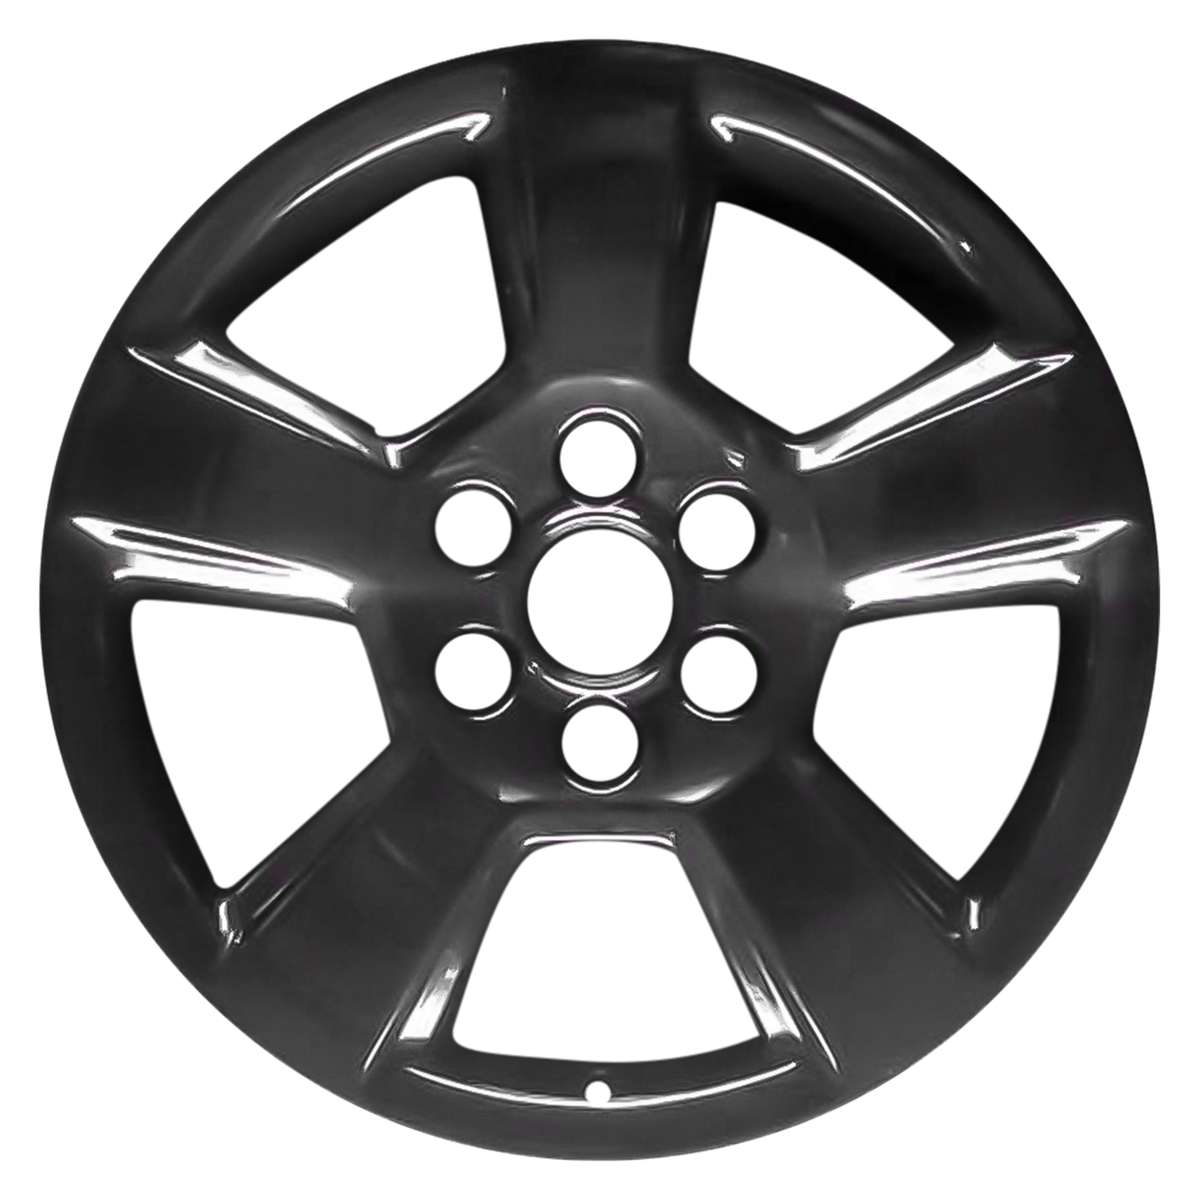 2019 Chevrolet Suburban 1500 20" OEM Wheel Rim W5754B